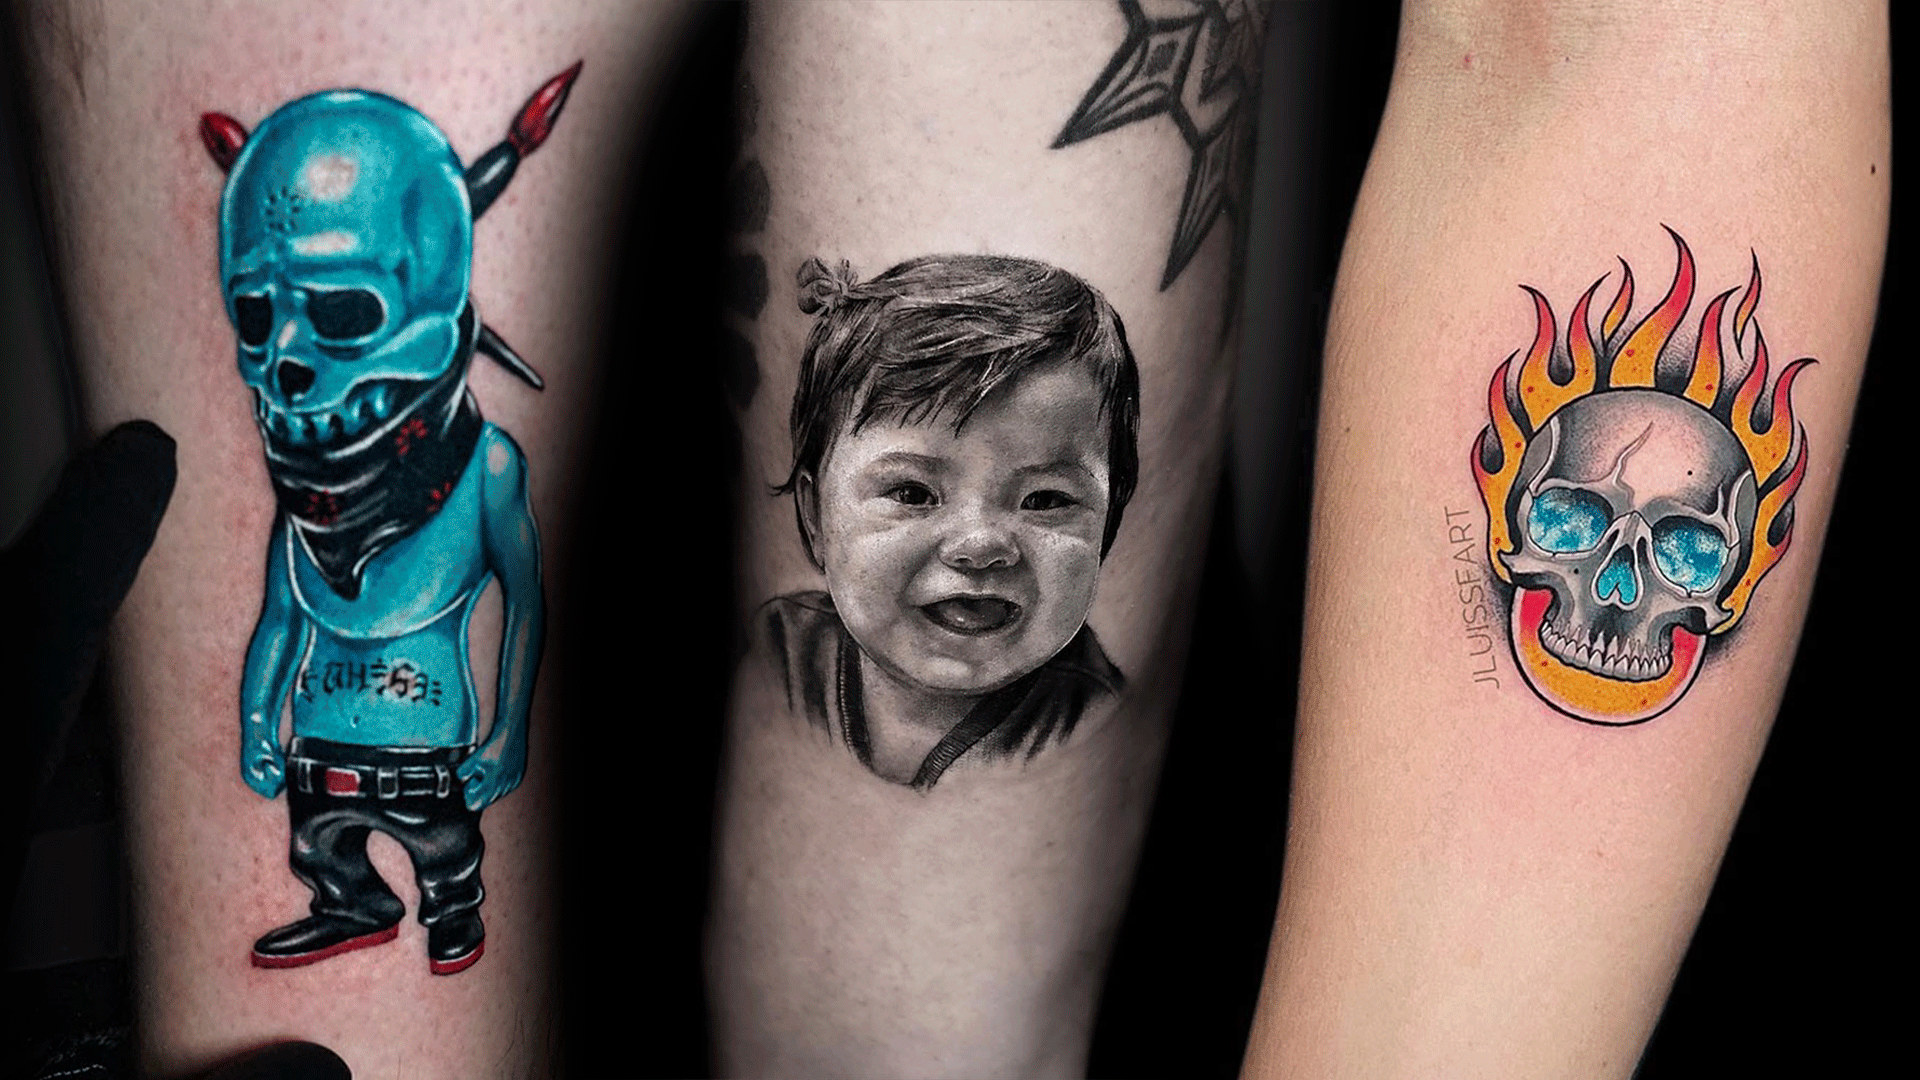 Stunning Small Tattoo Ideas